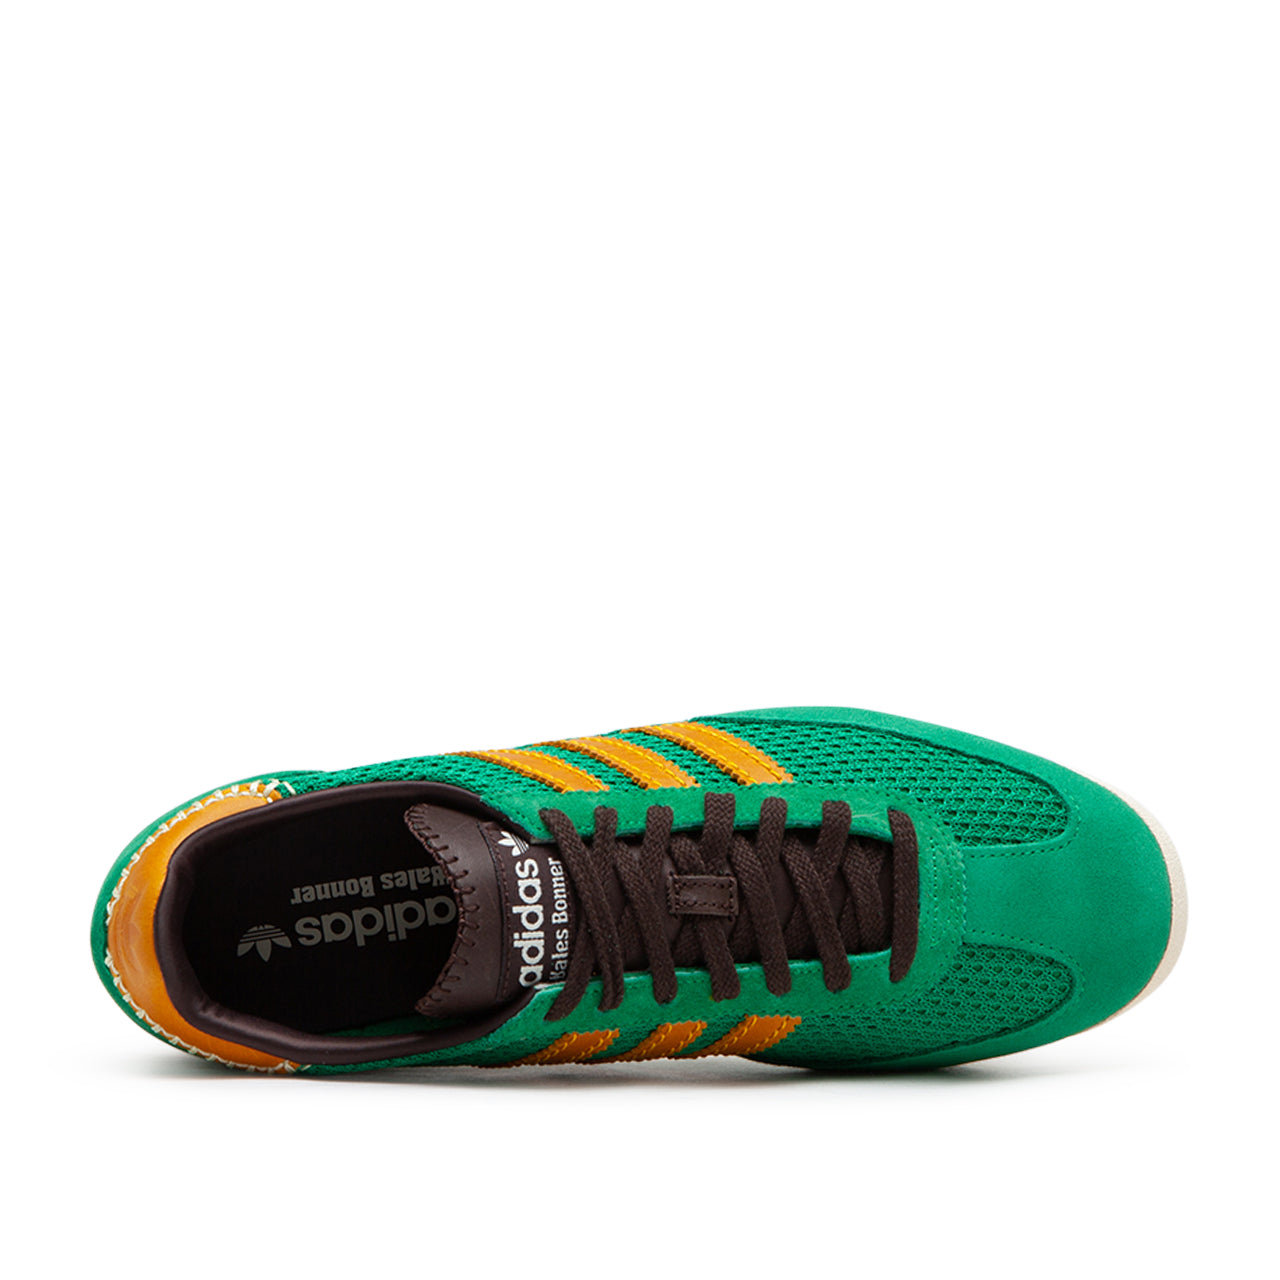 adidas x wales bonner sl72 knit (team green / collegiate gold / dark brown)